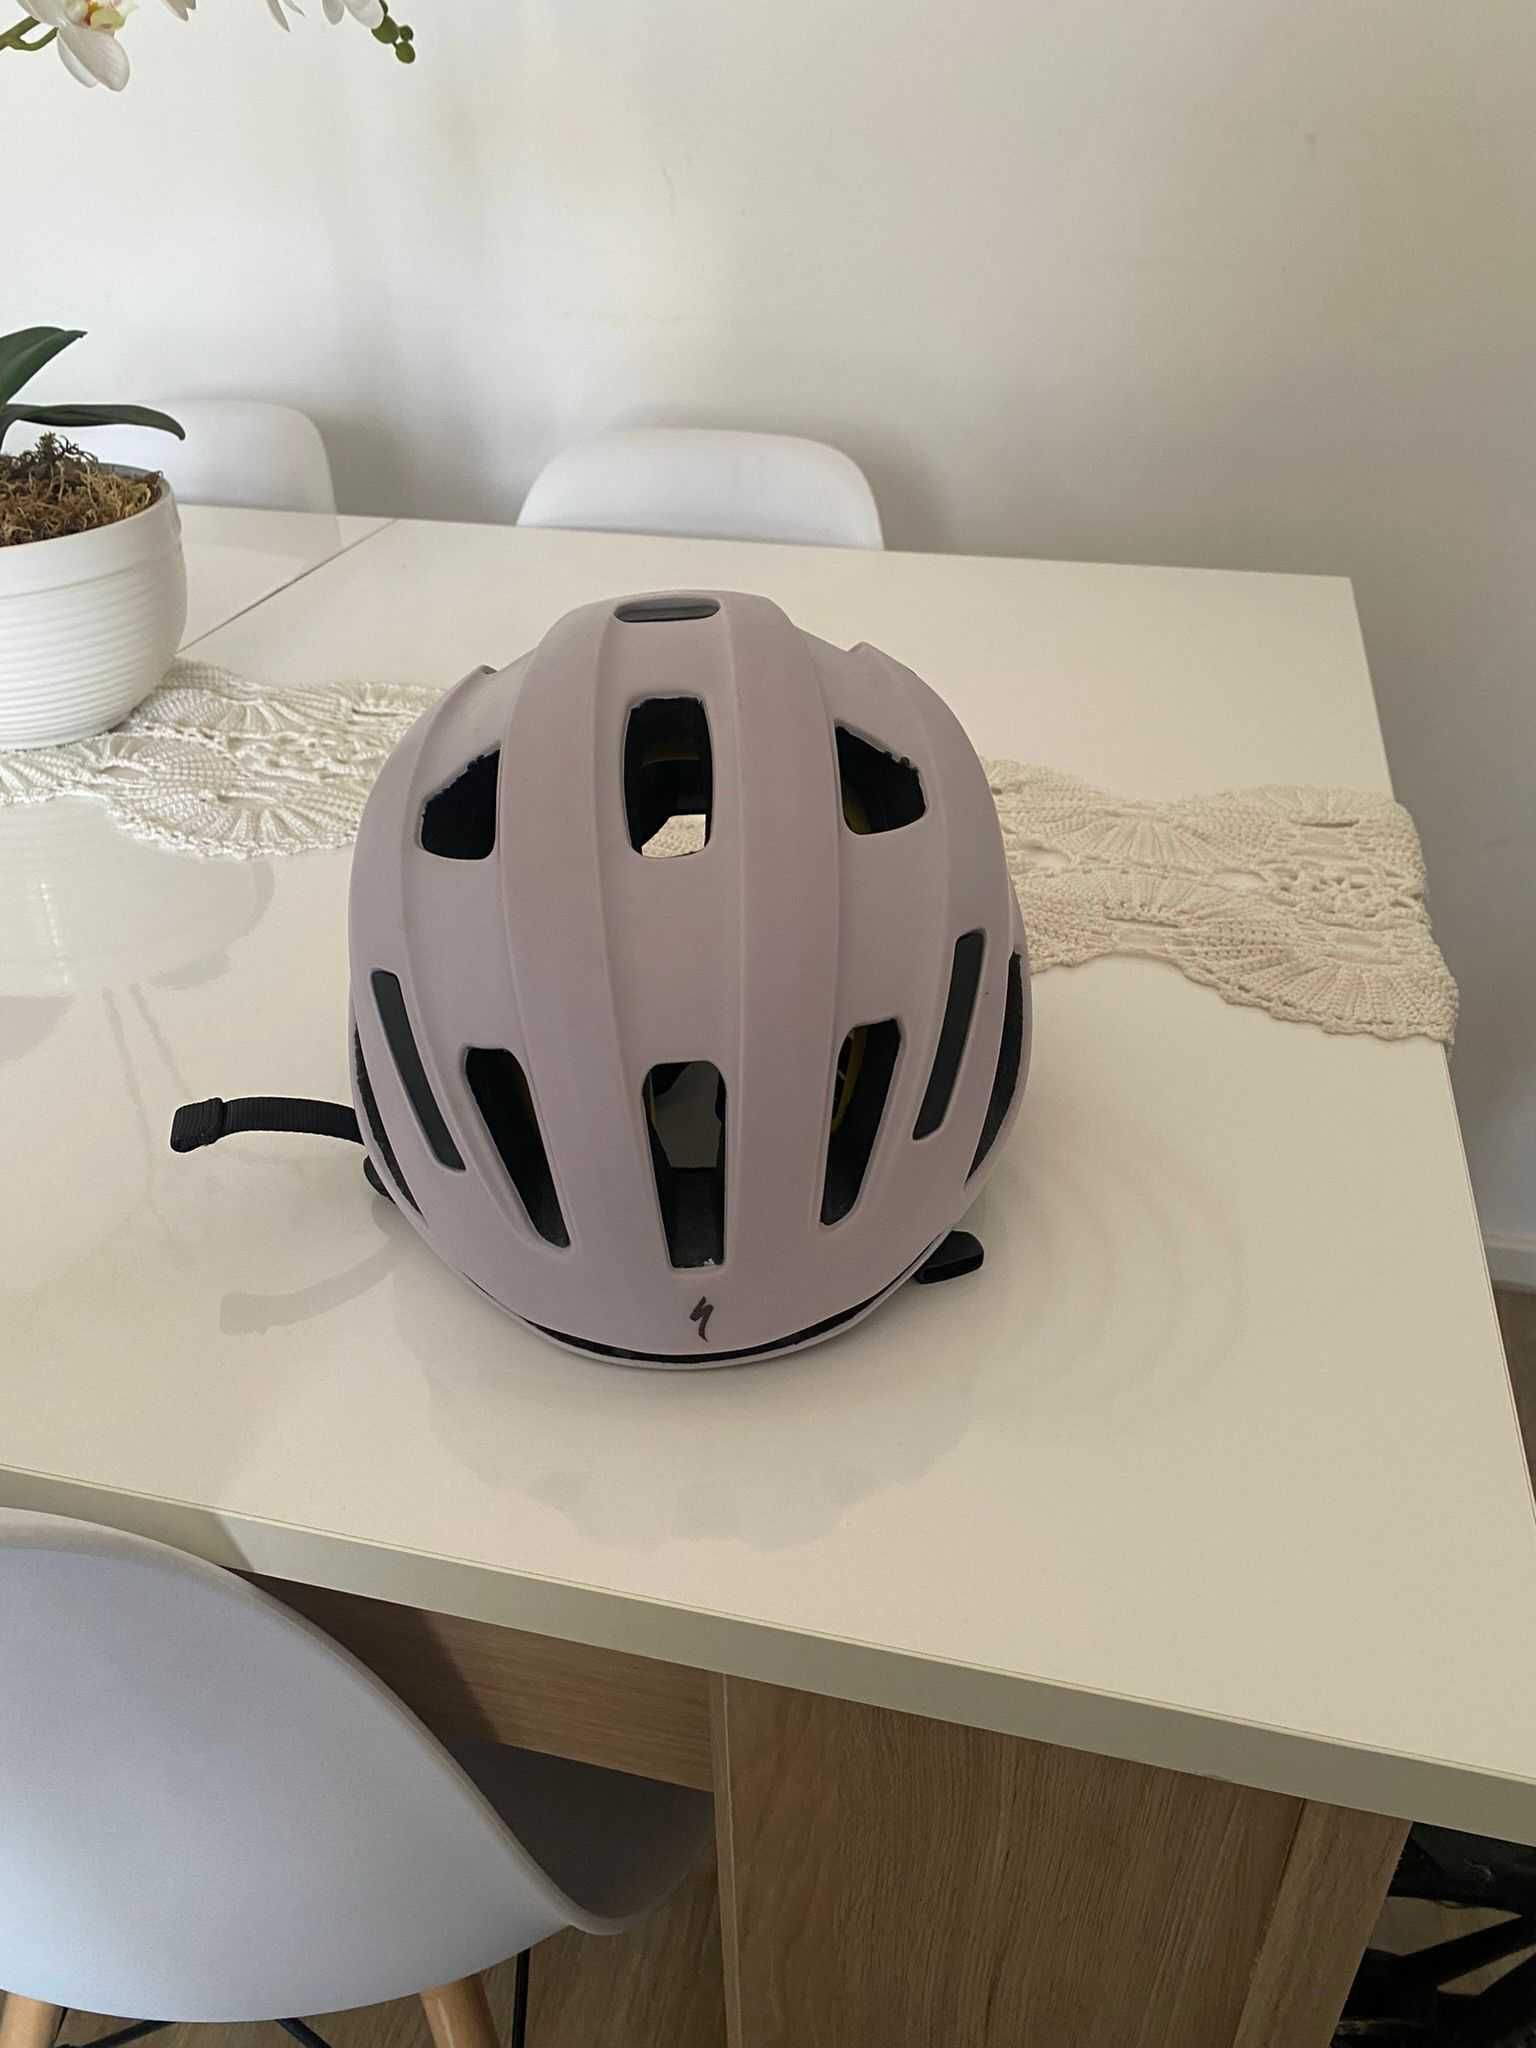 Bicicleta elétrica Fiido + capacete - vendo ou troco